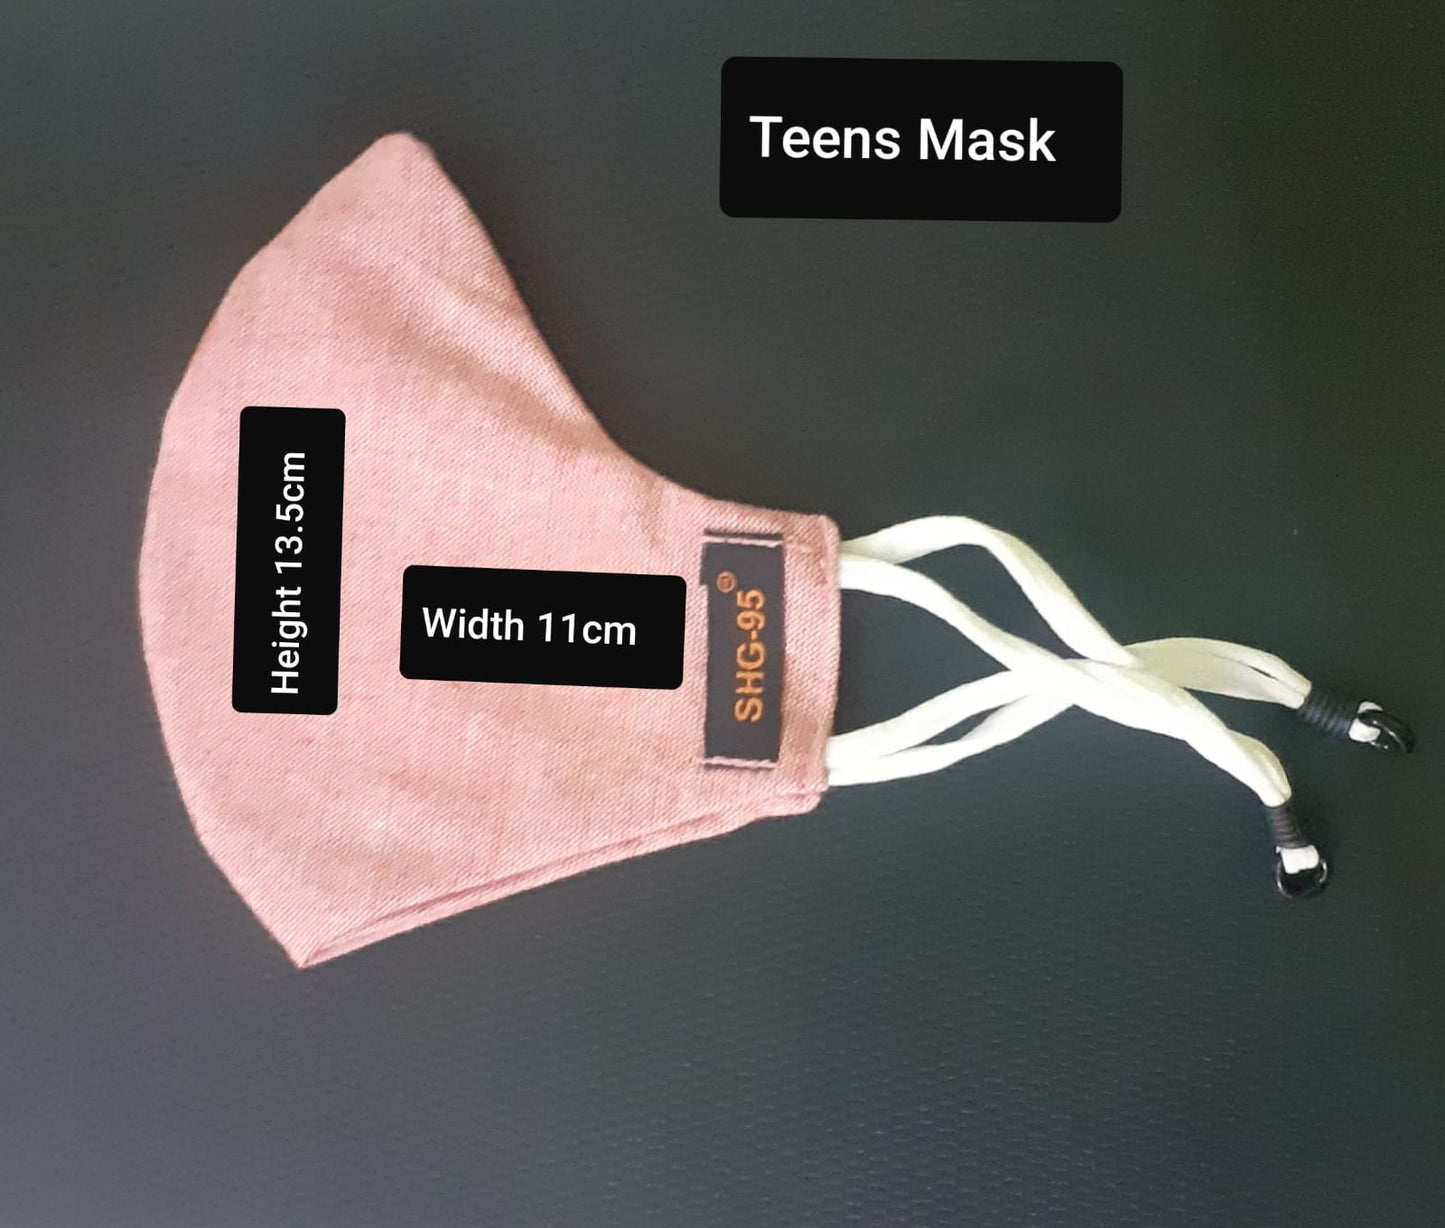 Teens mask